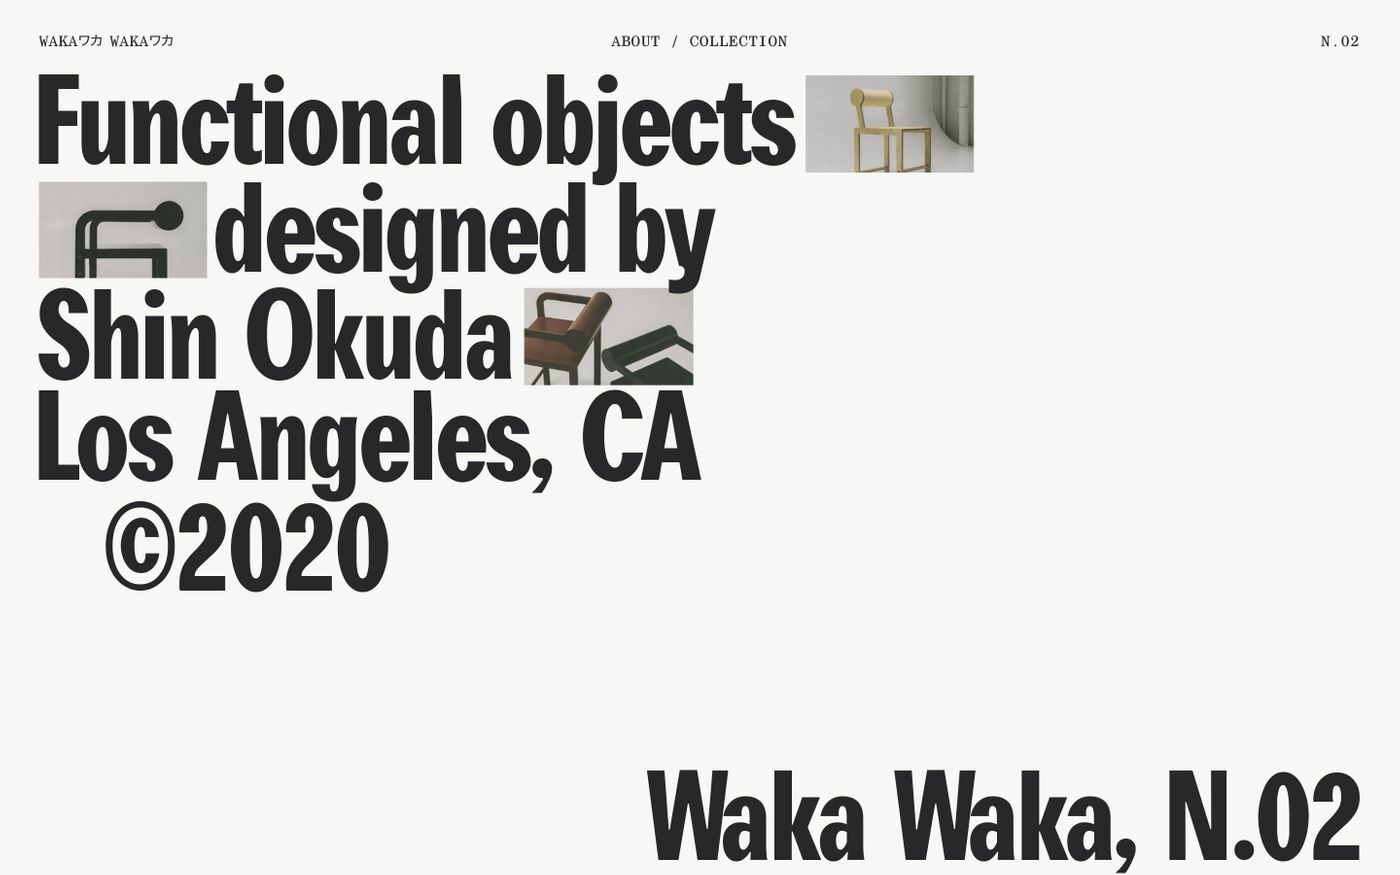 Screenshot of Waka Waka, Collection N.02 website